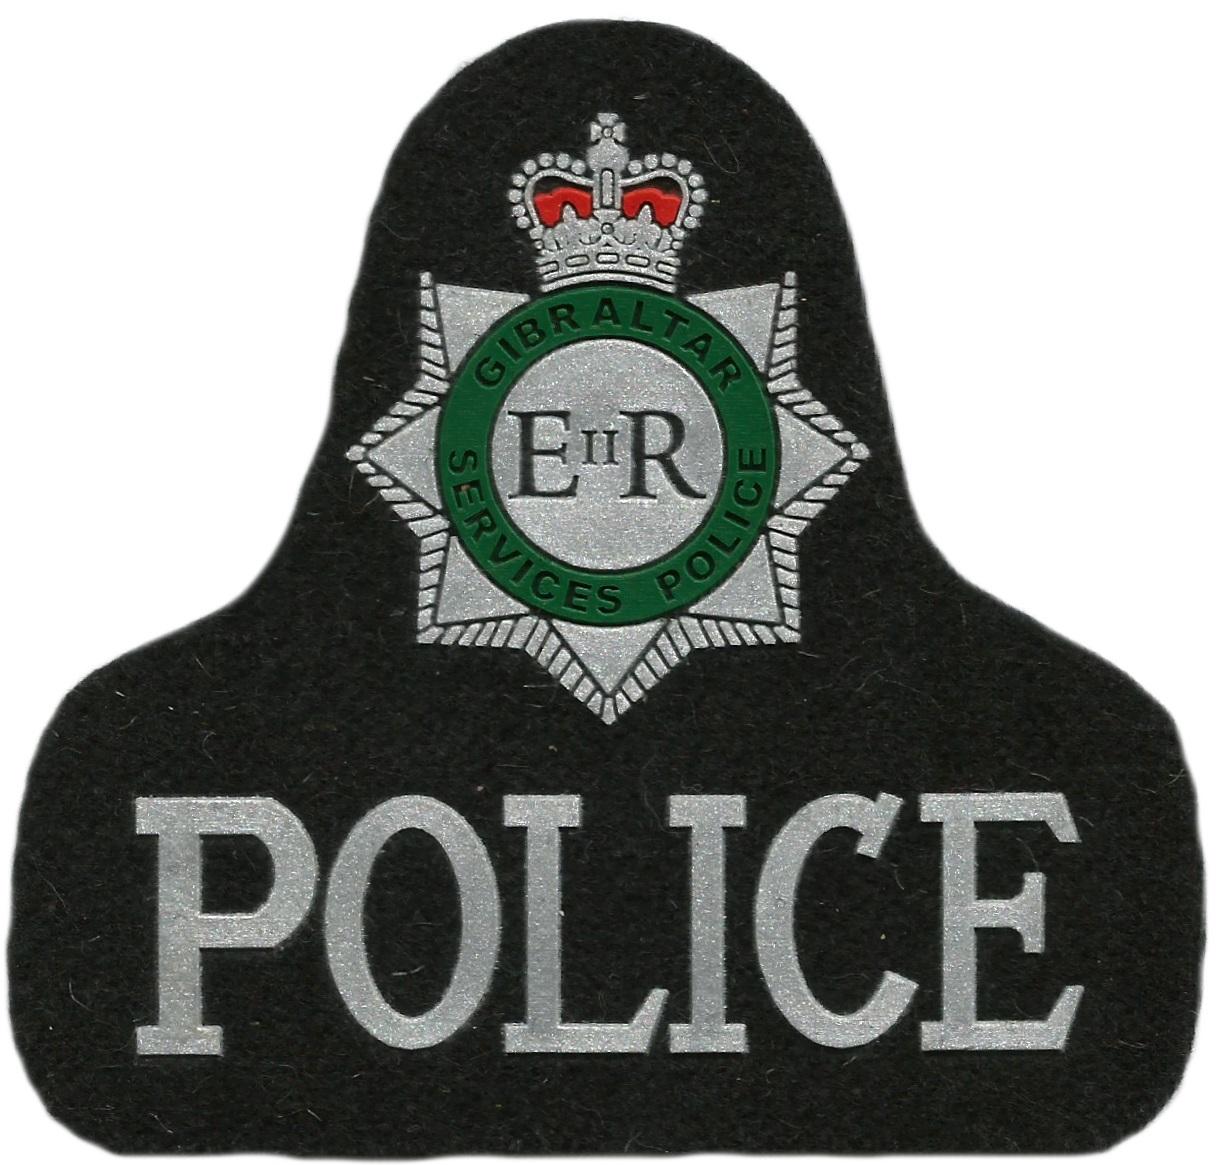 Servicio de Policía de Gibraltar Police Service parche insignia emblema distintivo